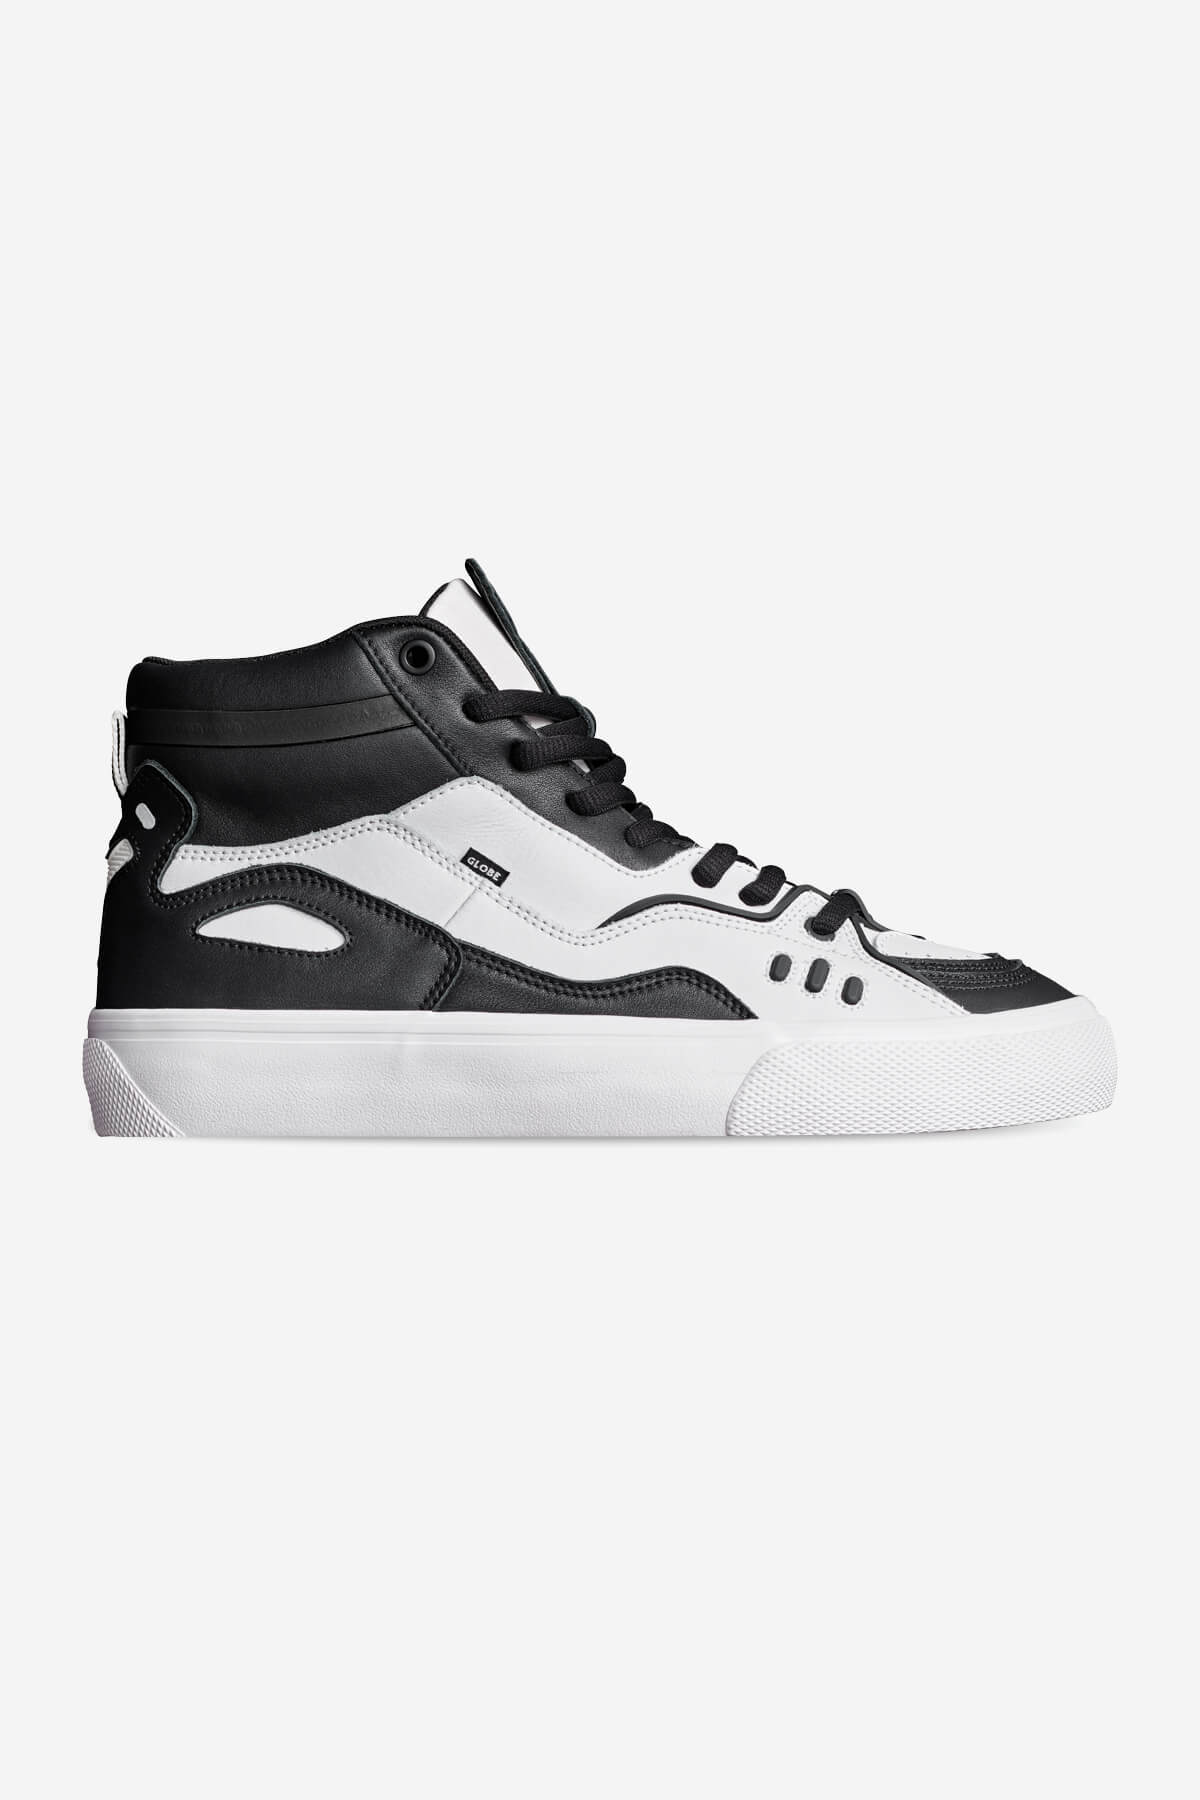 Globe - Dimension - Black/White - skateboard Chaussures